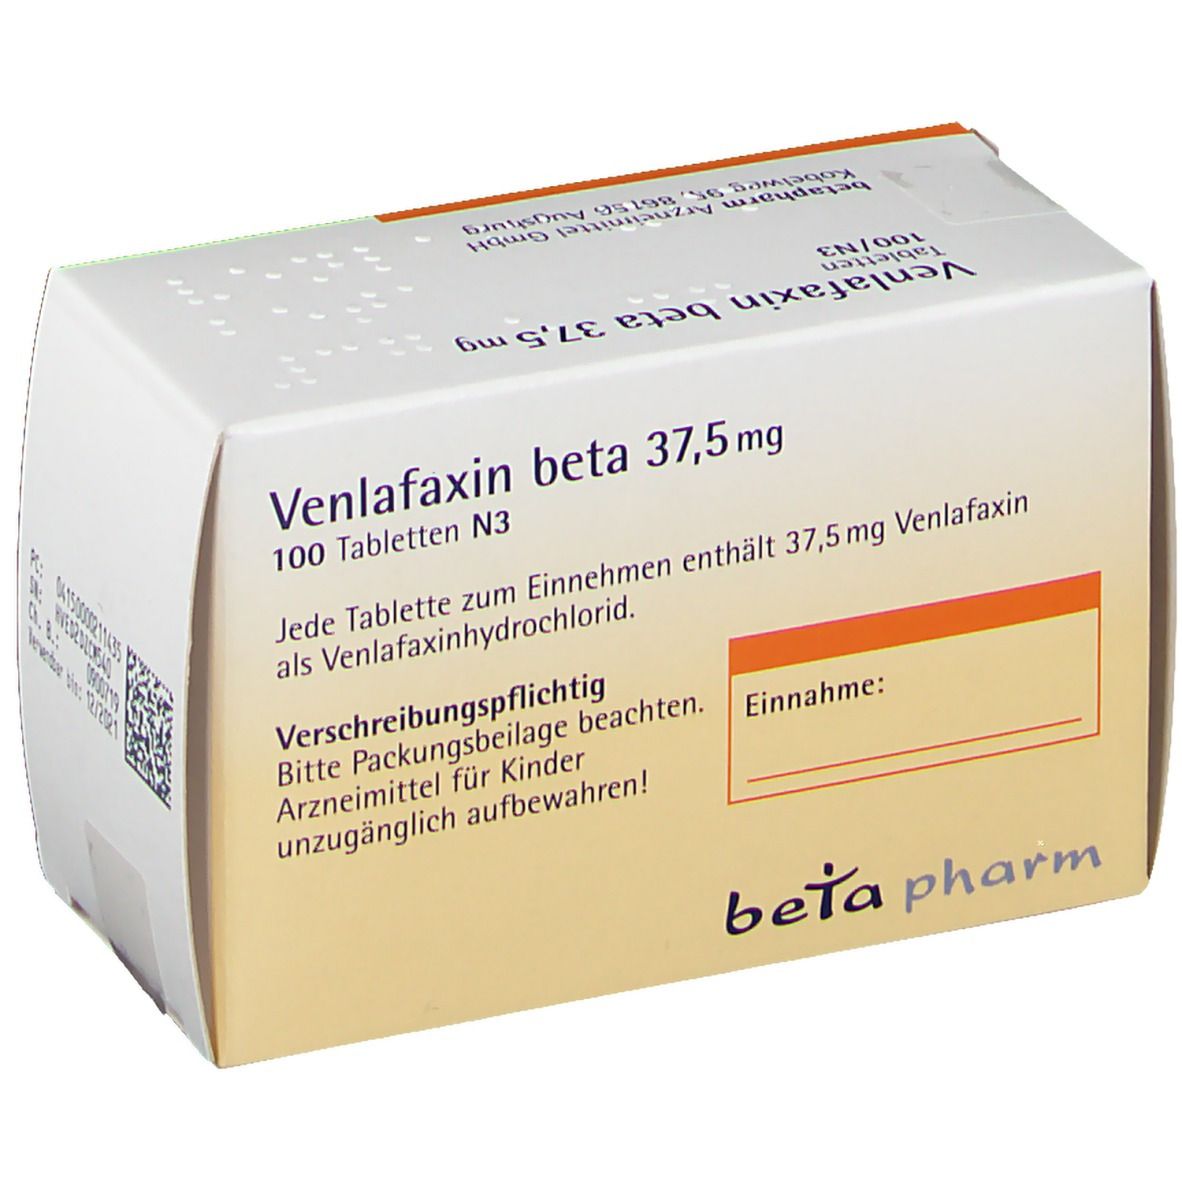 Venlafaxin beta 37,5 mg